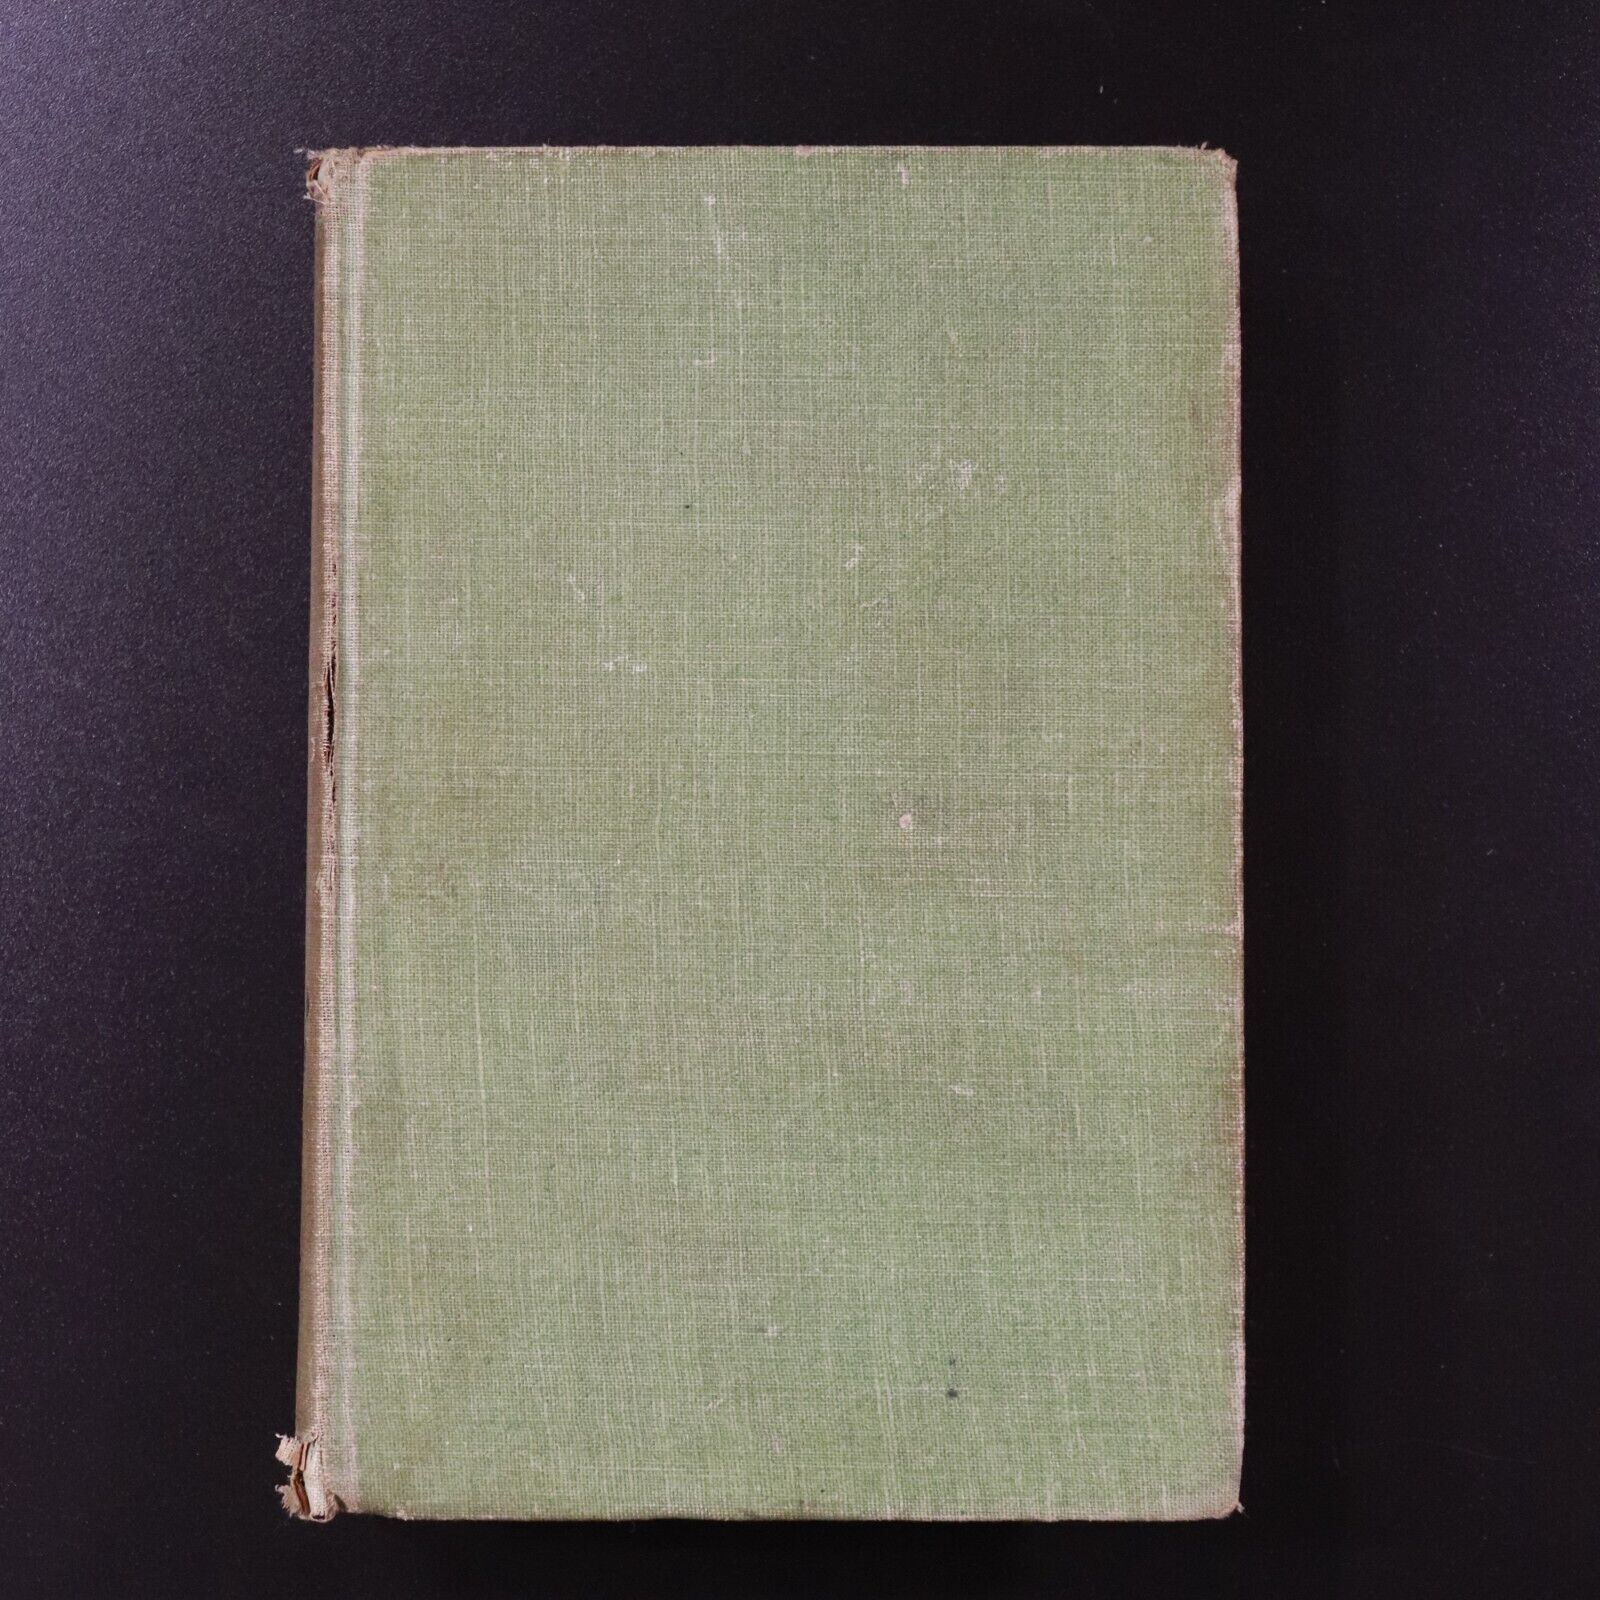 1918 Leg-Bail by John Butler Cooper 1st Edition Australian Fiction Book